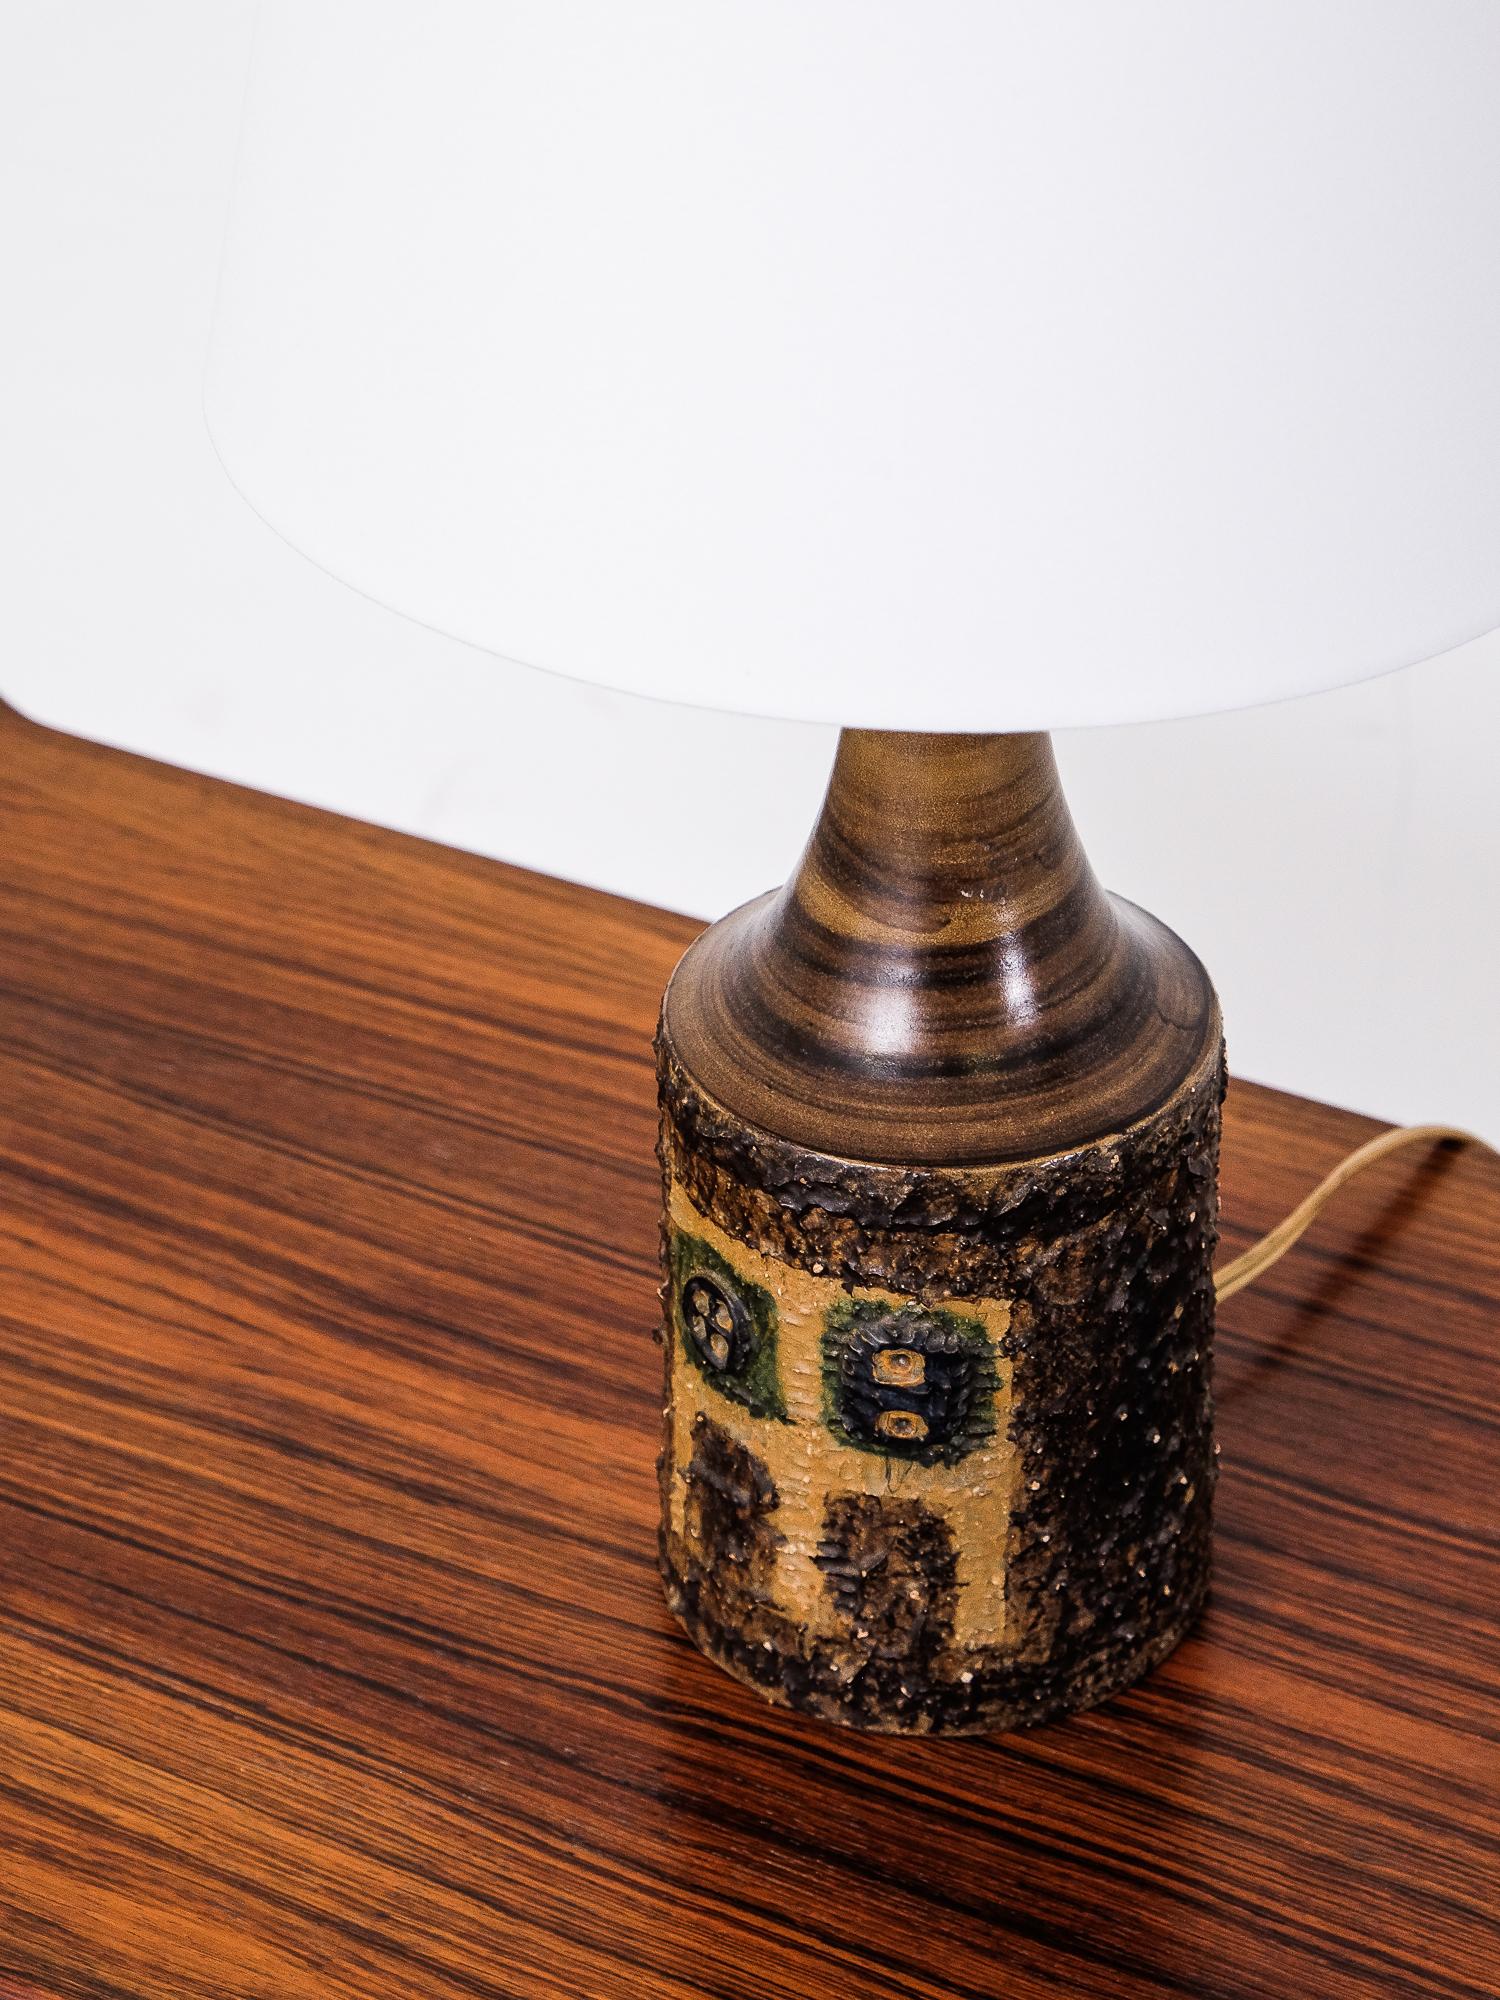 Ceramic table lamp from 1960s, Denmark. Marked 